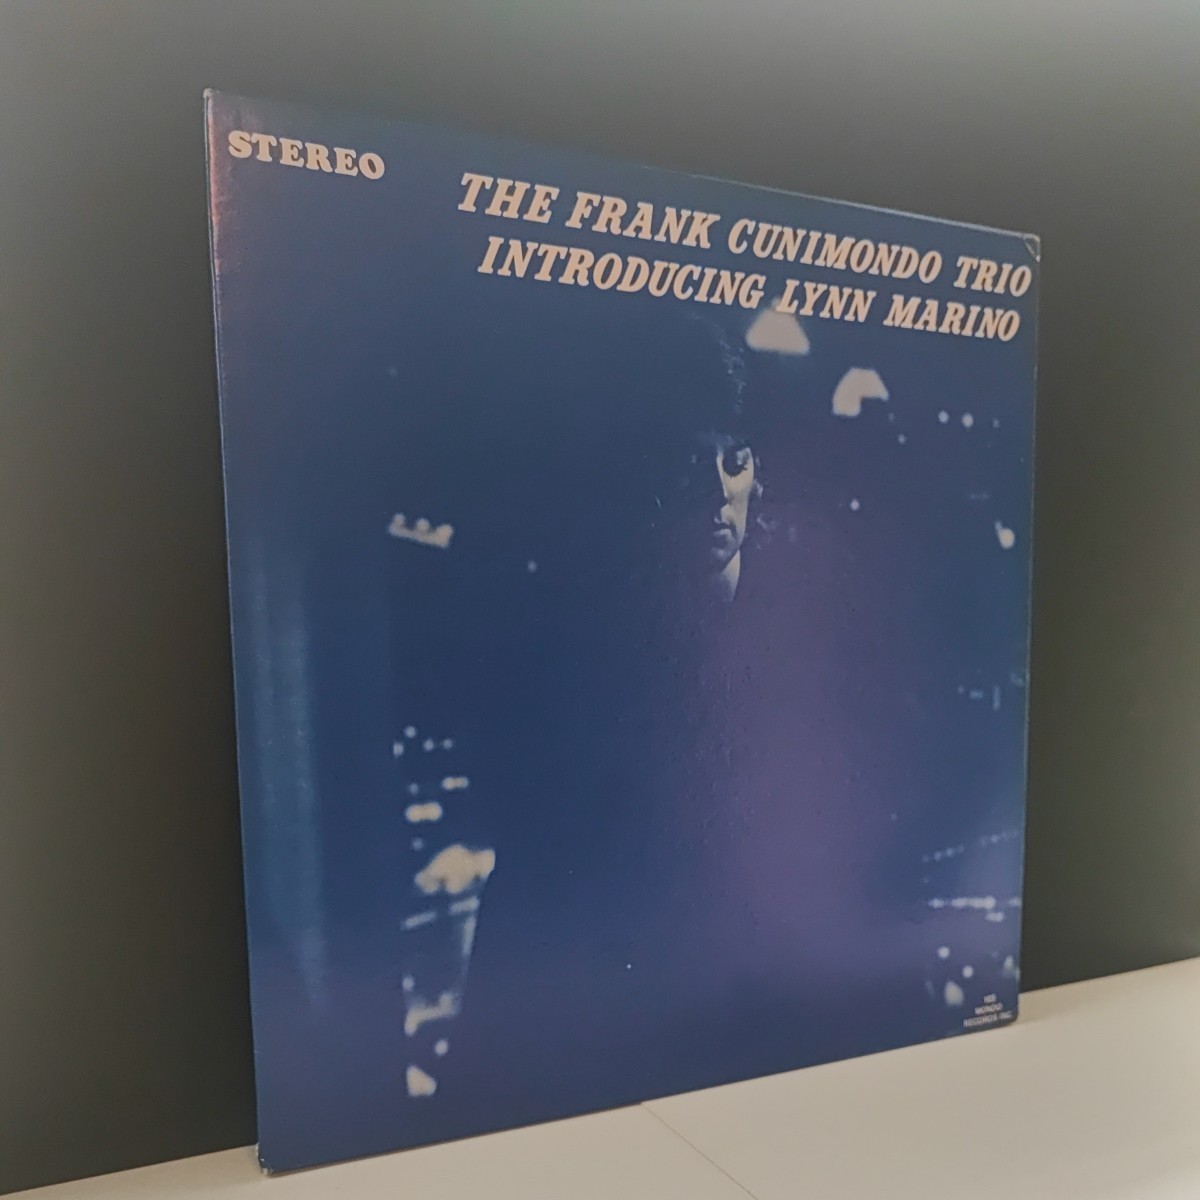 The Frank Cunimondo Trio